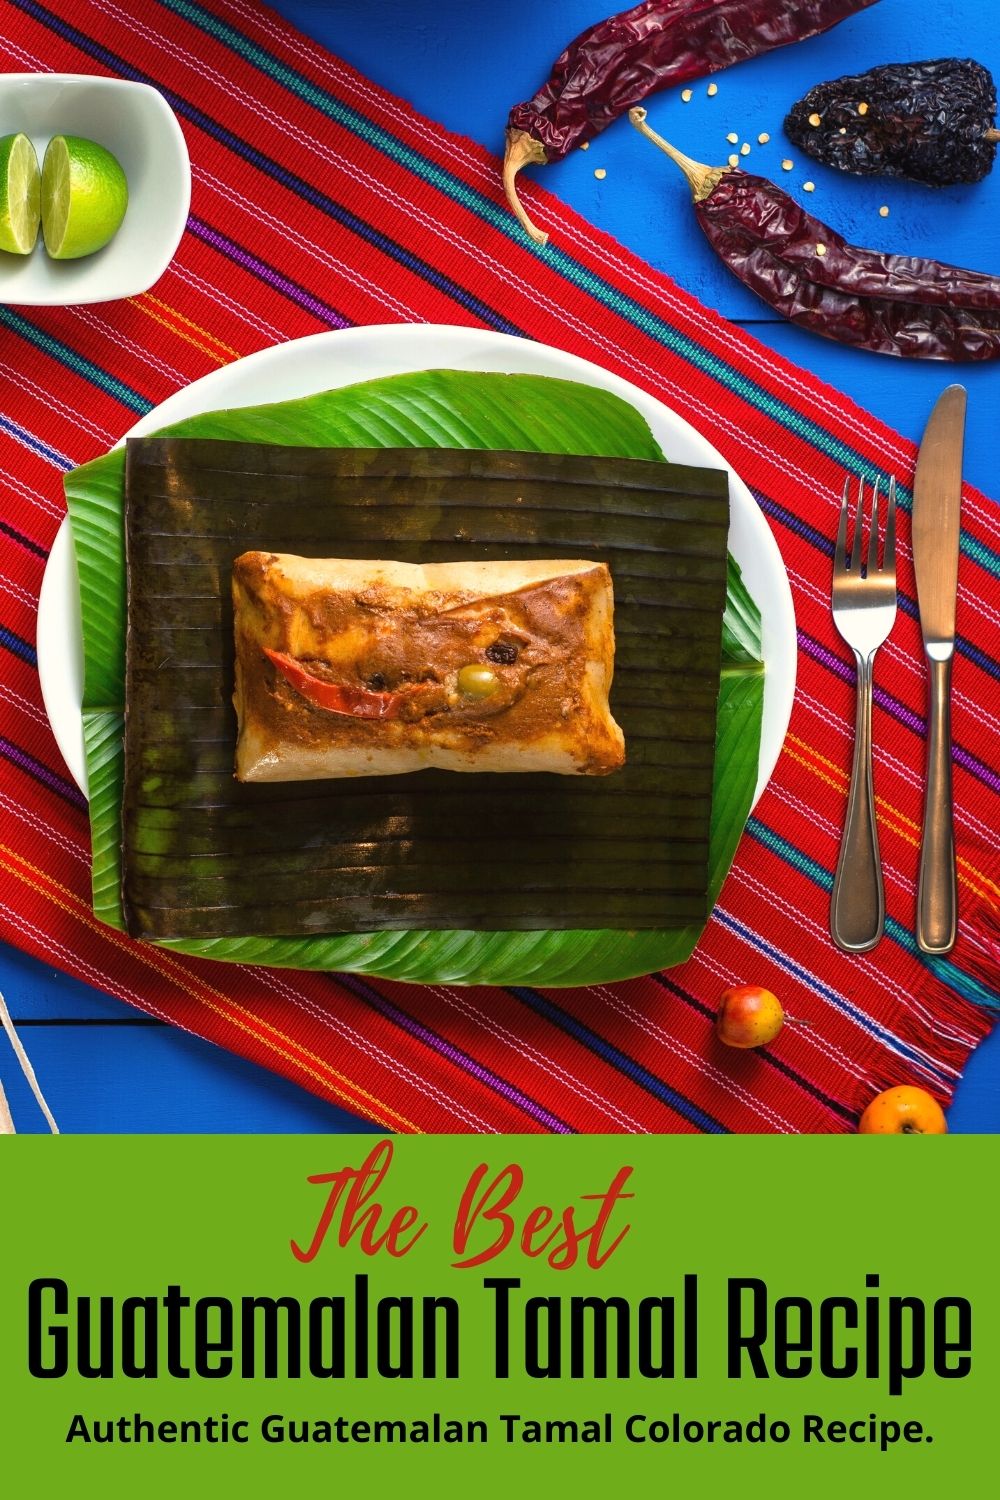 The best Guatemalan tamal recipe